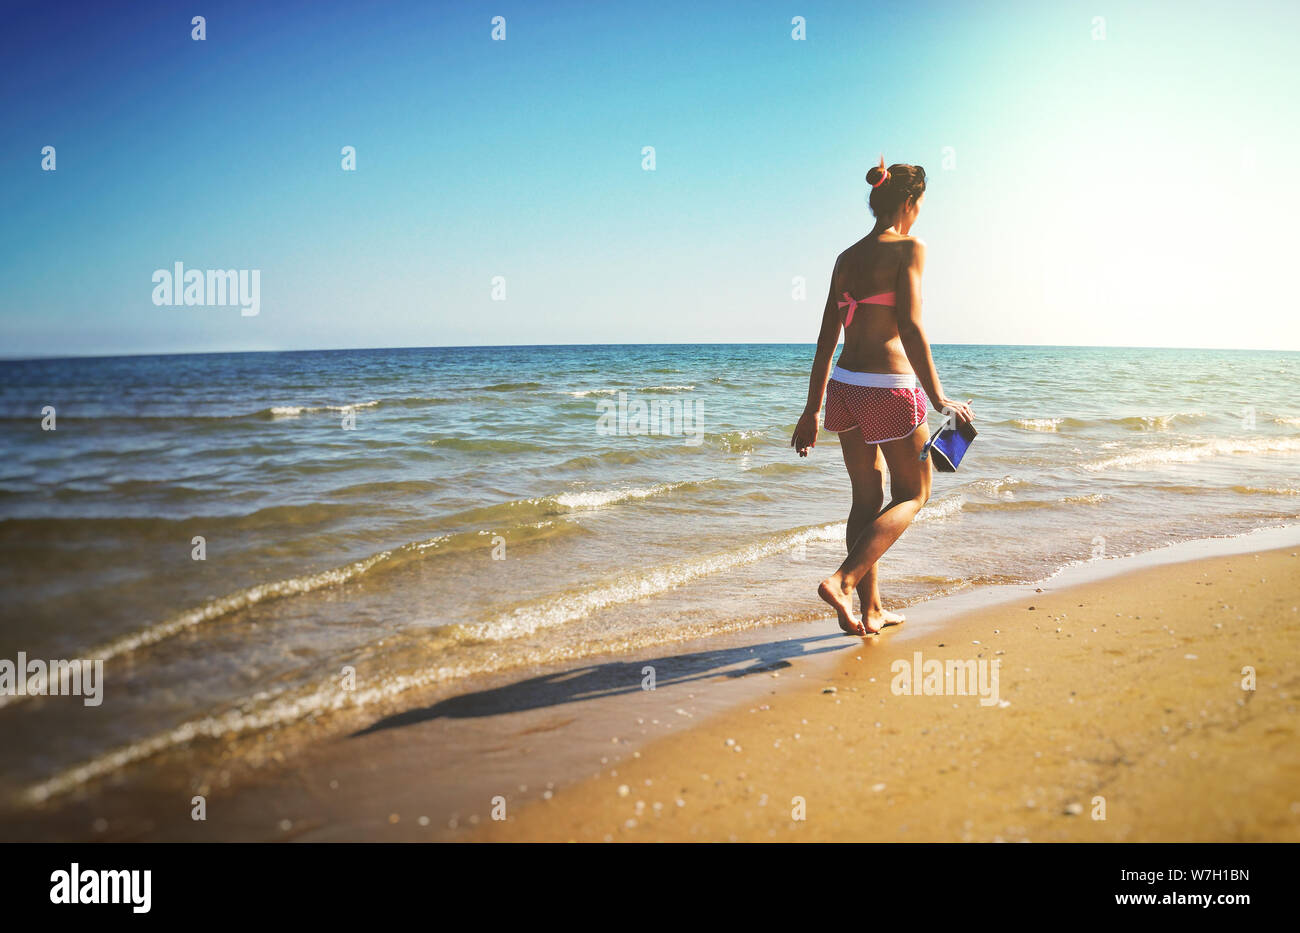 single woman walk beach from behind Stock Photo